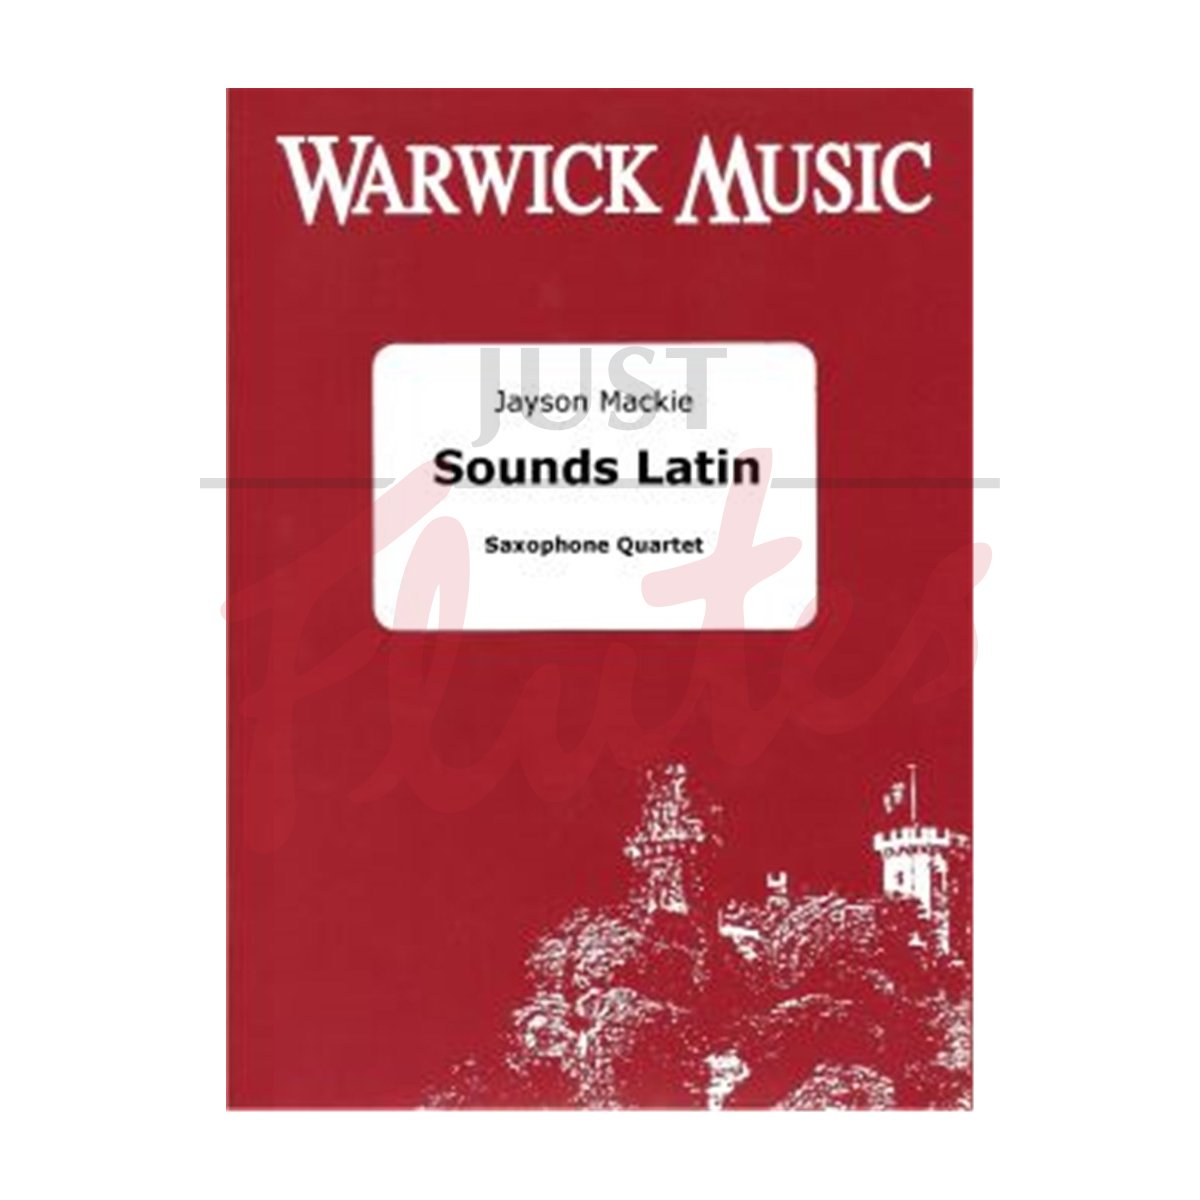 Sounds Latin for Saxophone Quartet